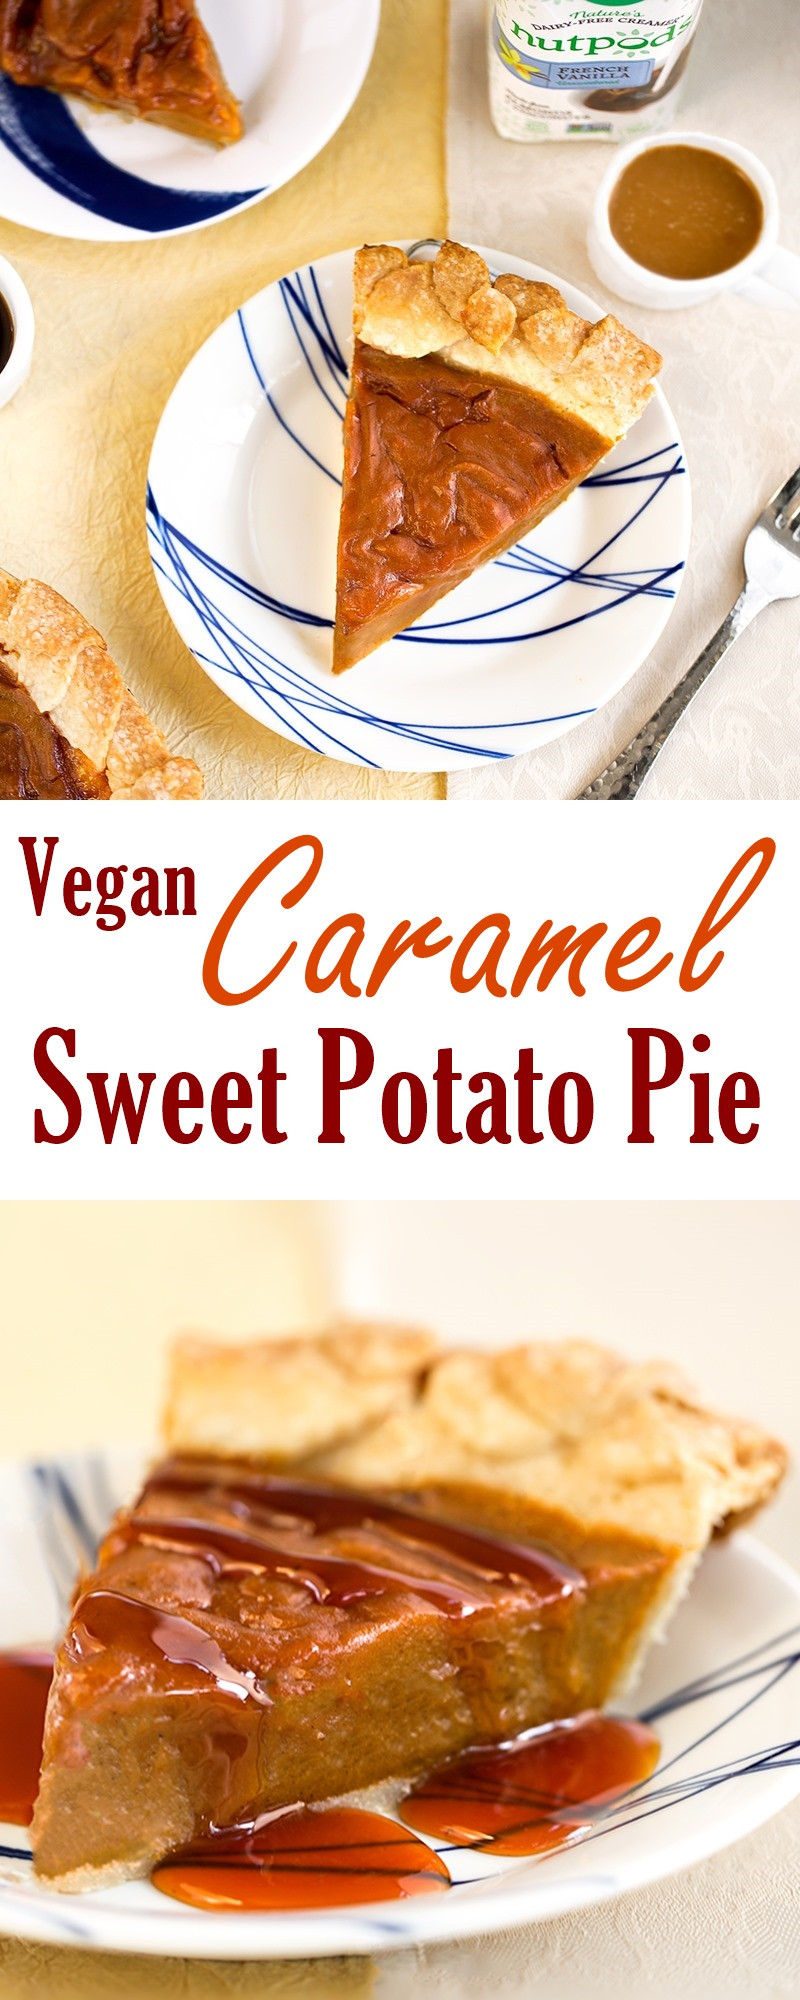 Sweet Potato Pie Vegan
 Vegan Caramel Sweet Potato Pie Recipe Dairy free Egg free